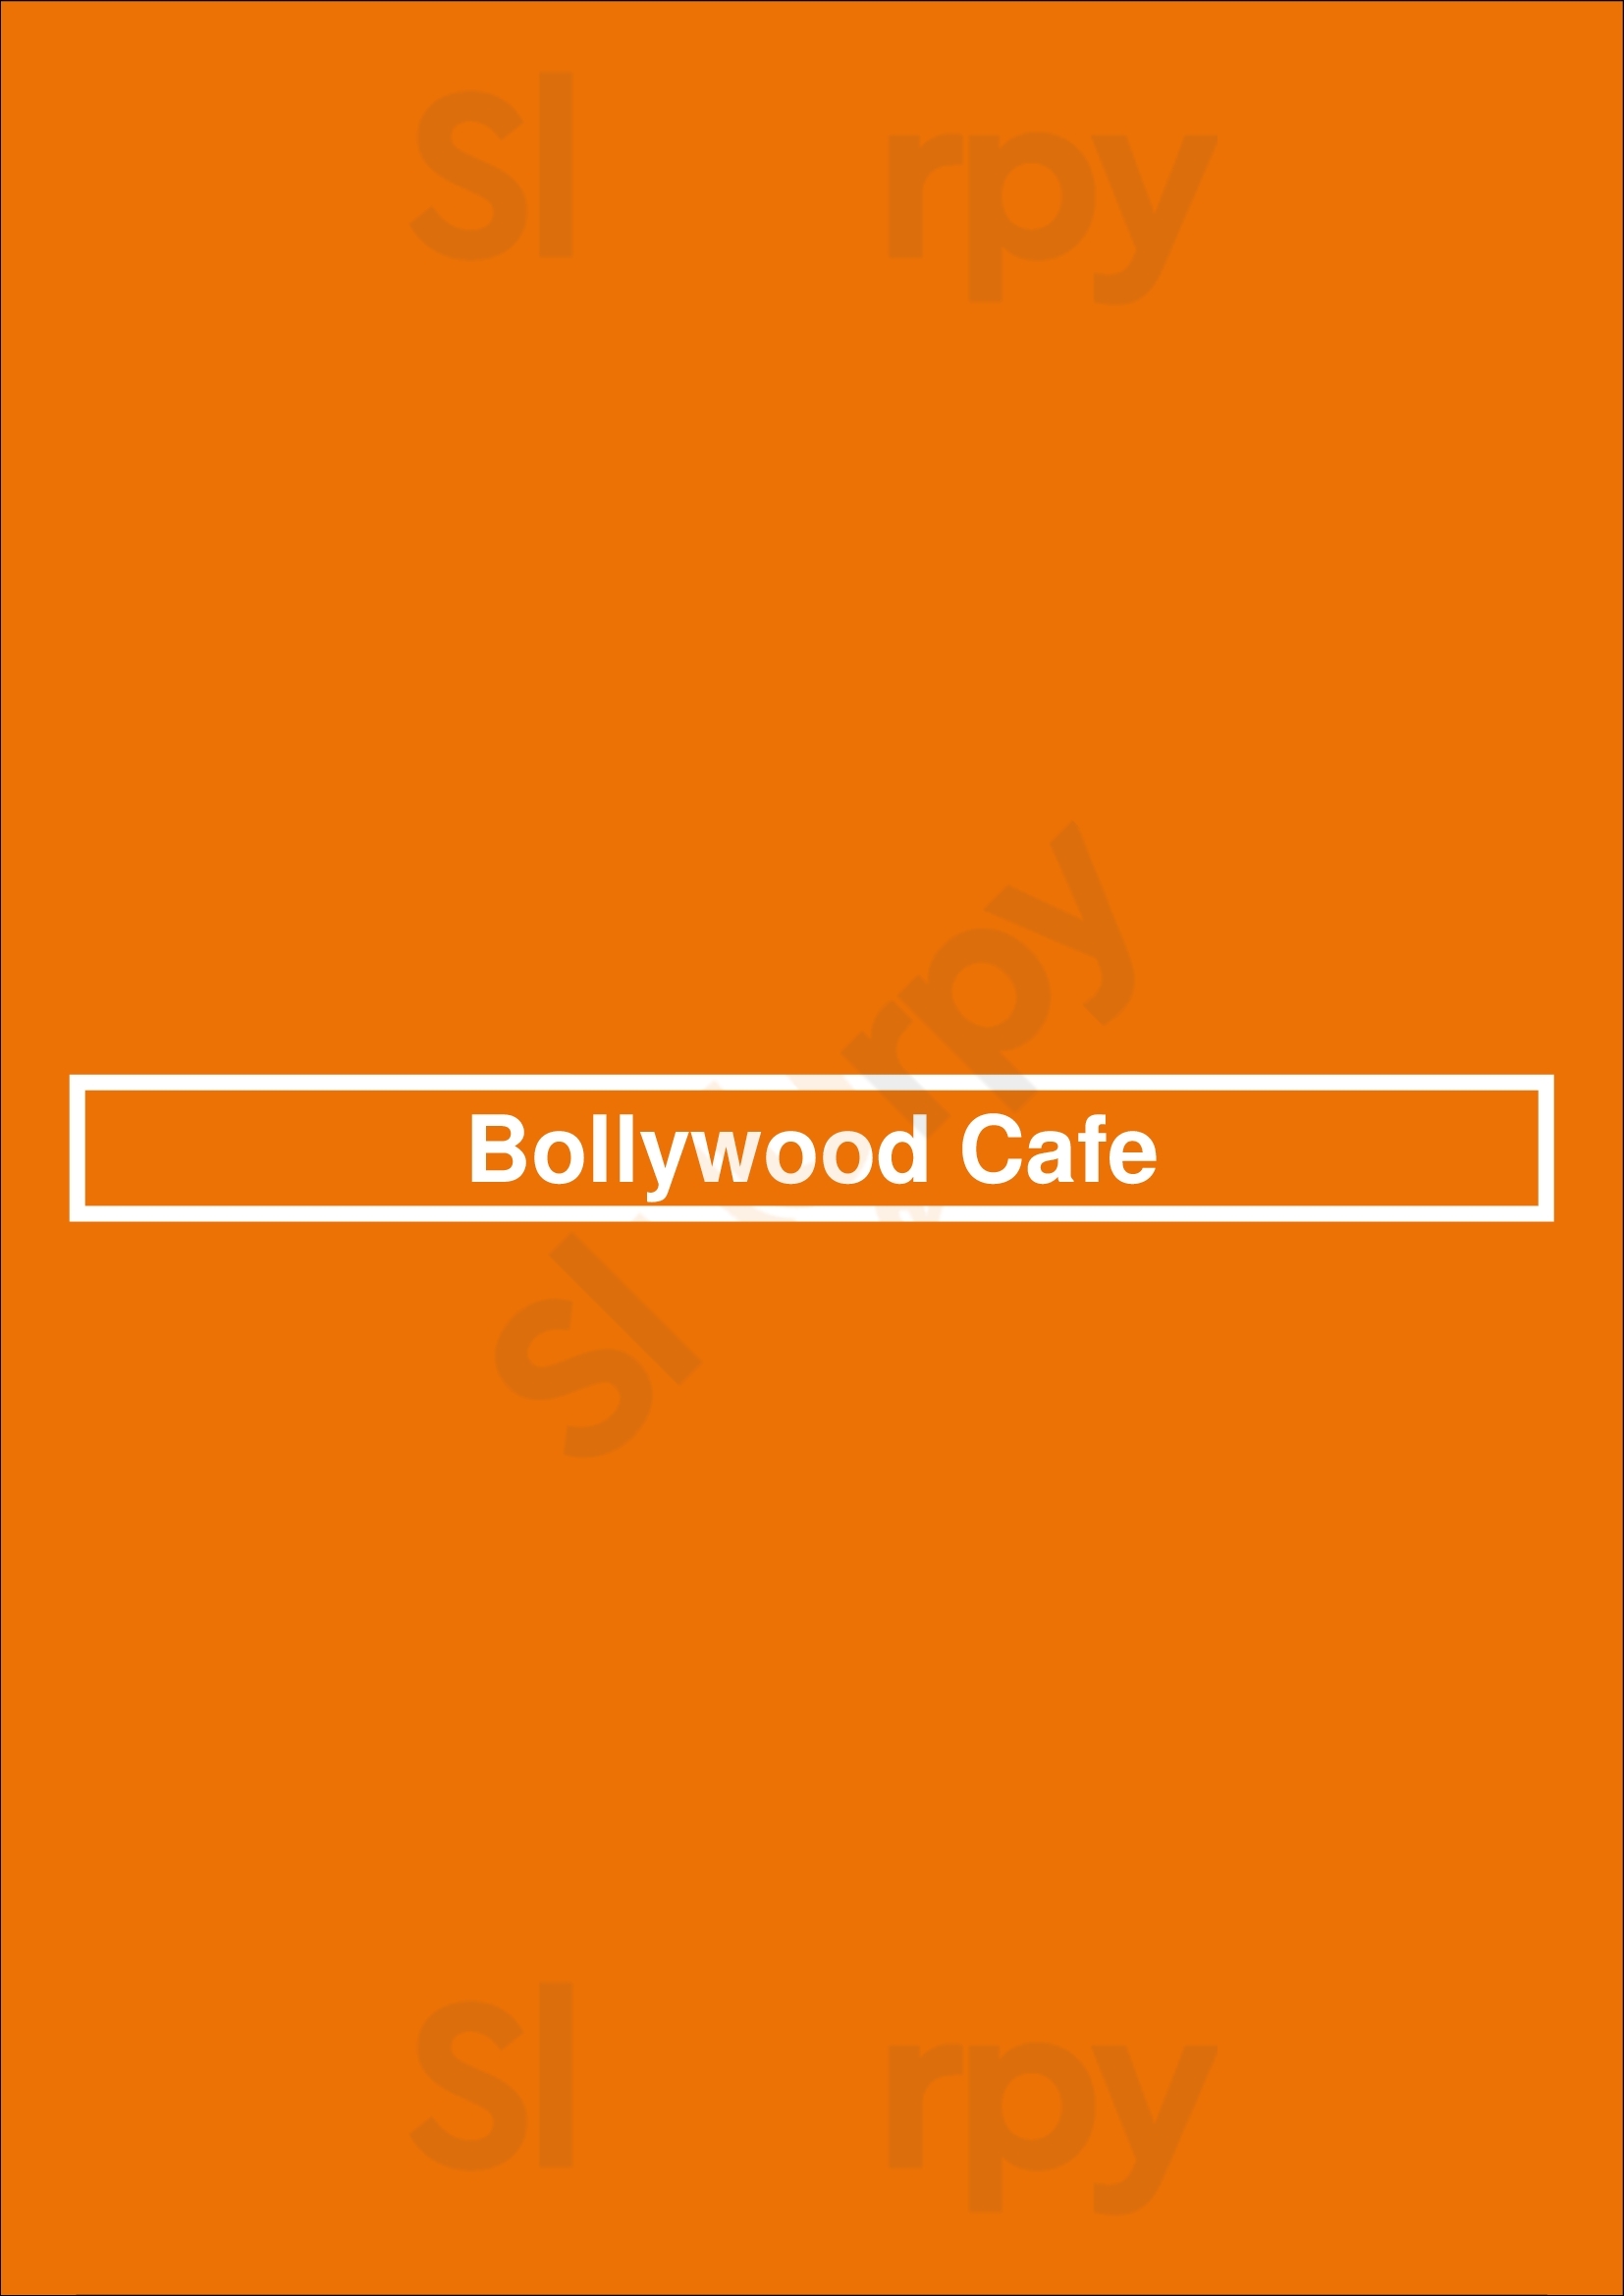 Bollywood Cafe Los Angeles Menu - 1